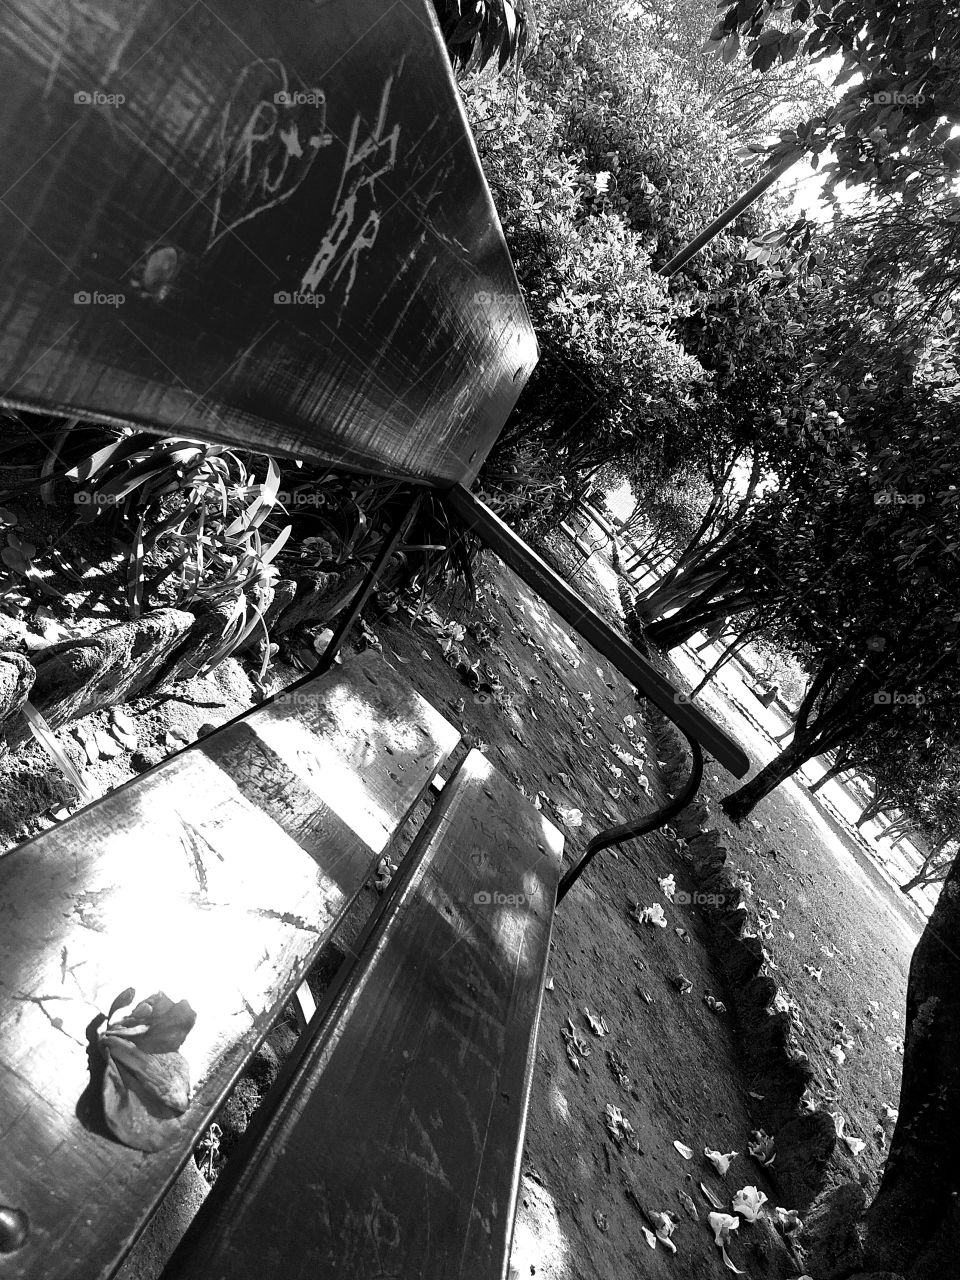 The lull across the garden bench. 
Black and white photografy